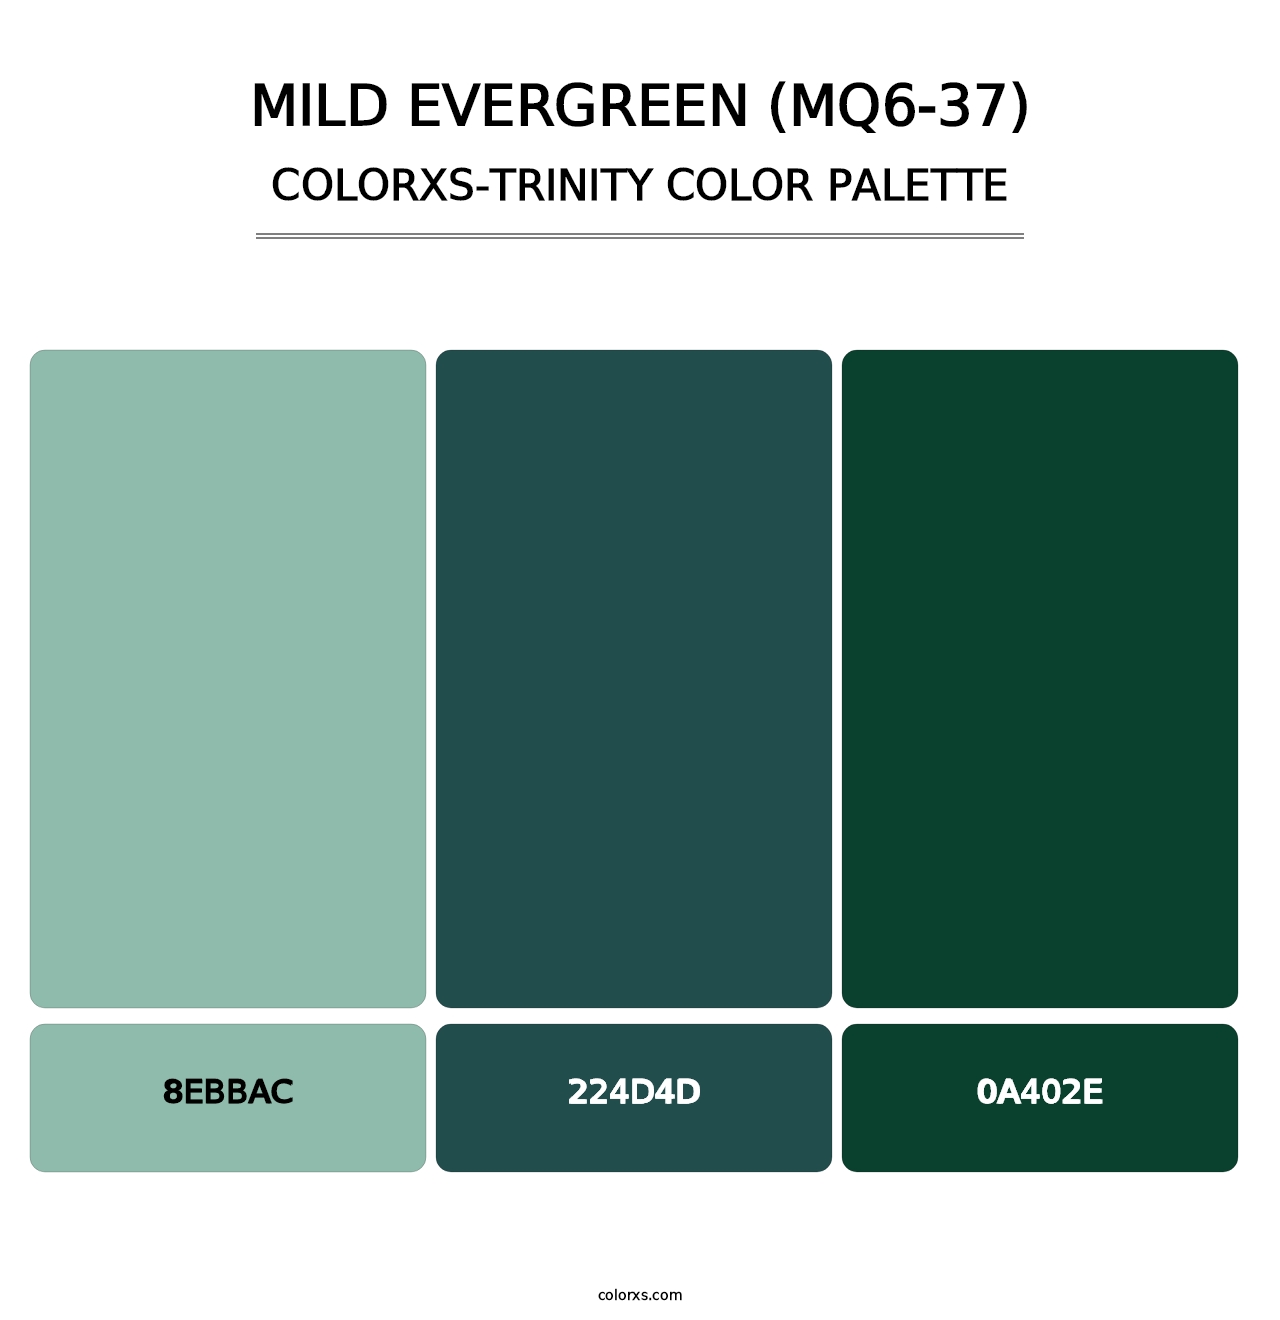 Mild Evergreen (MQ6-37) - Colorxs Trinity Palette